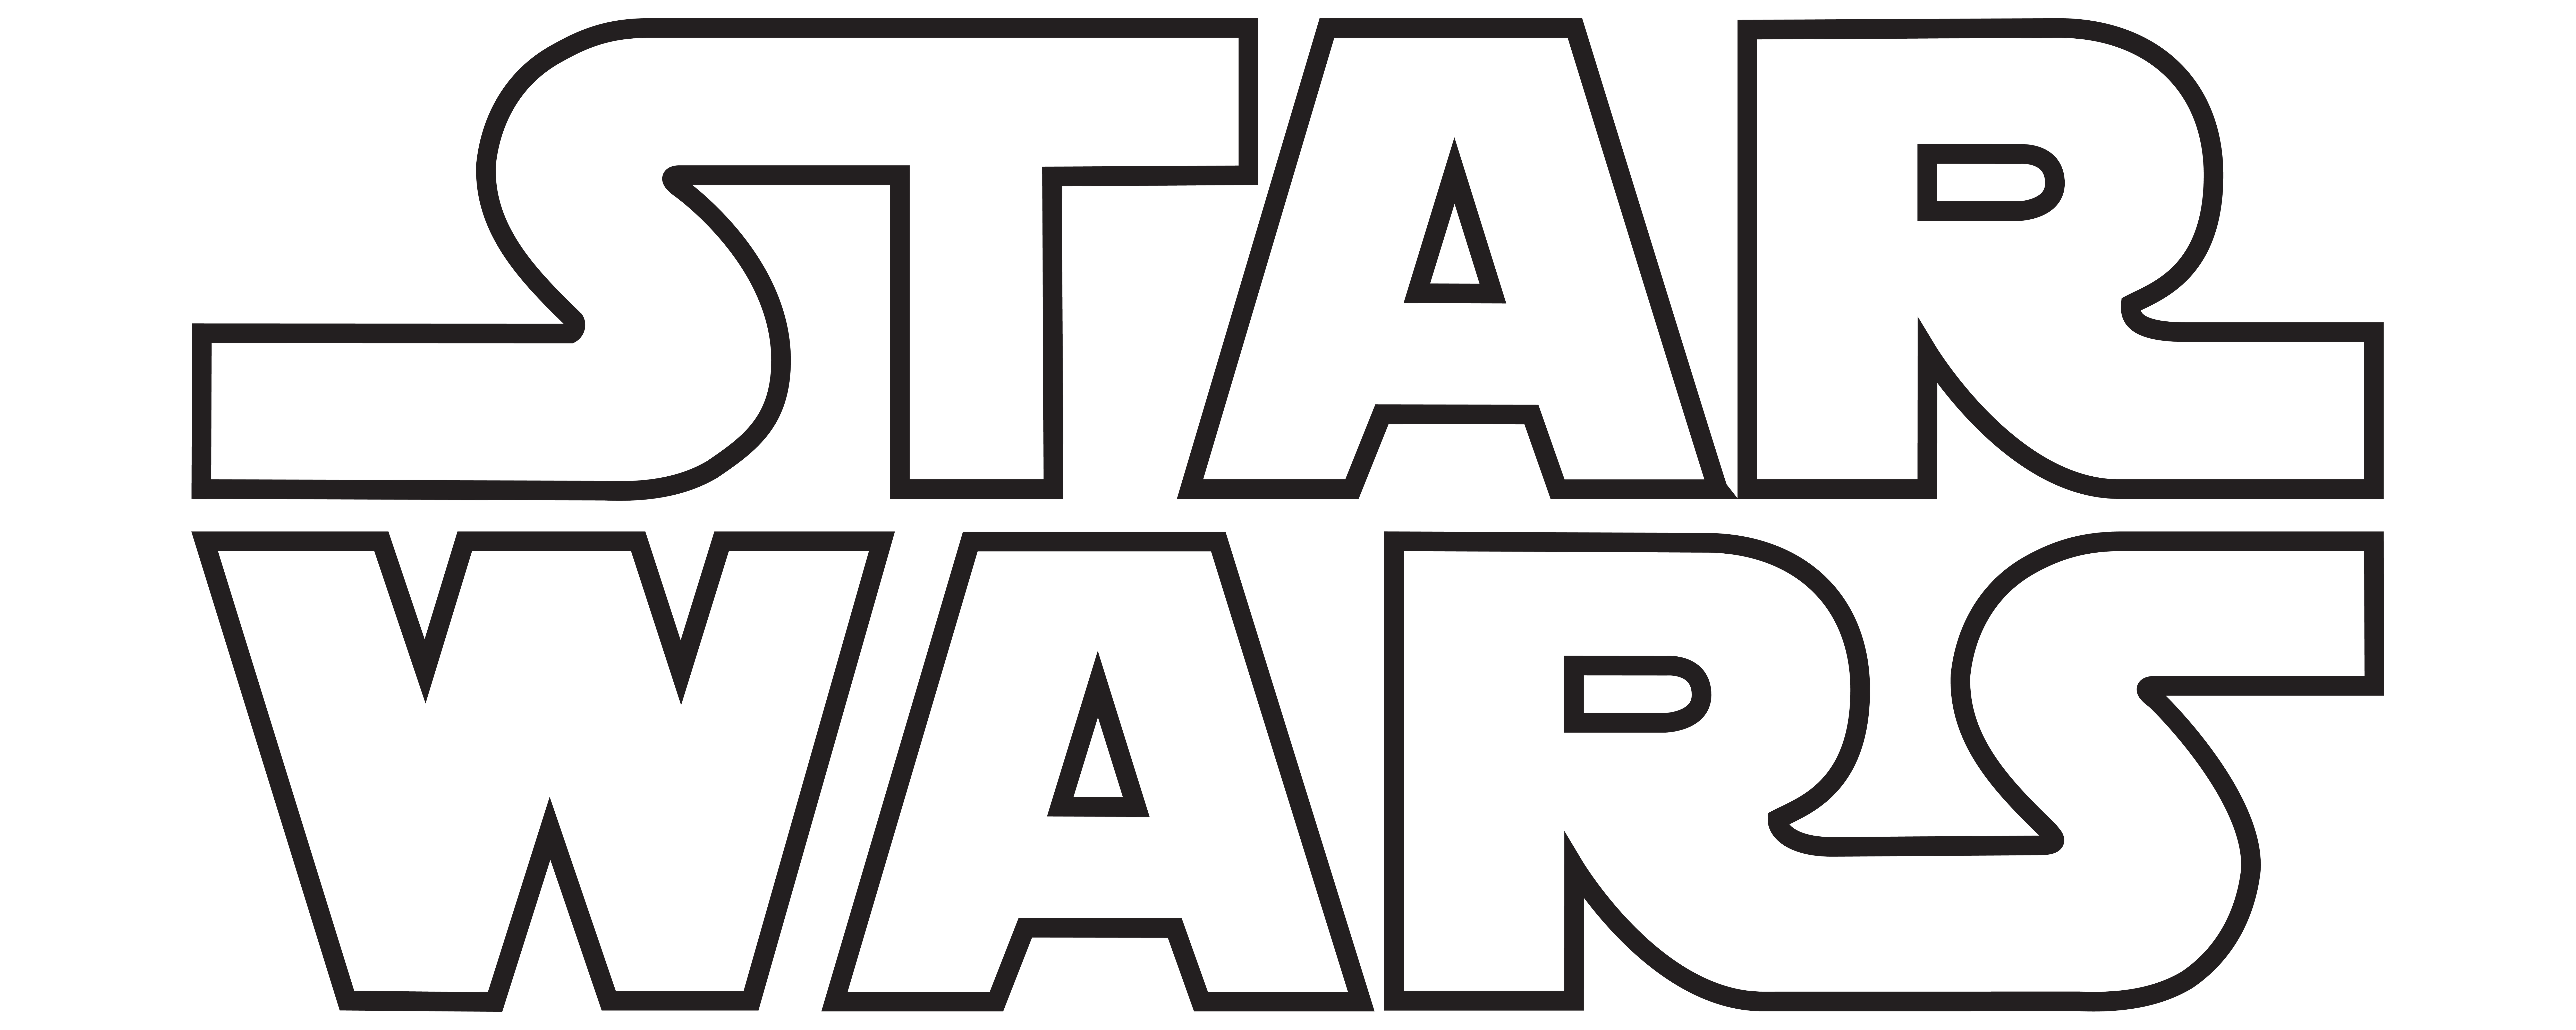 Star Wars Logo - Star wars logo PNG images